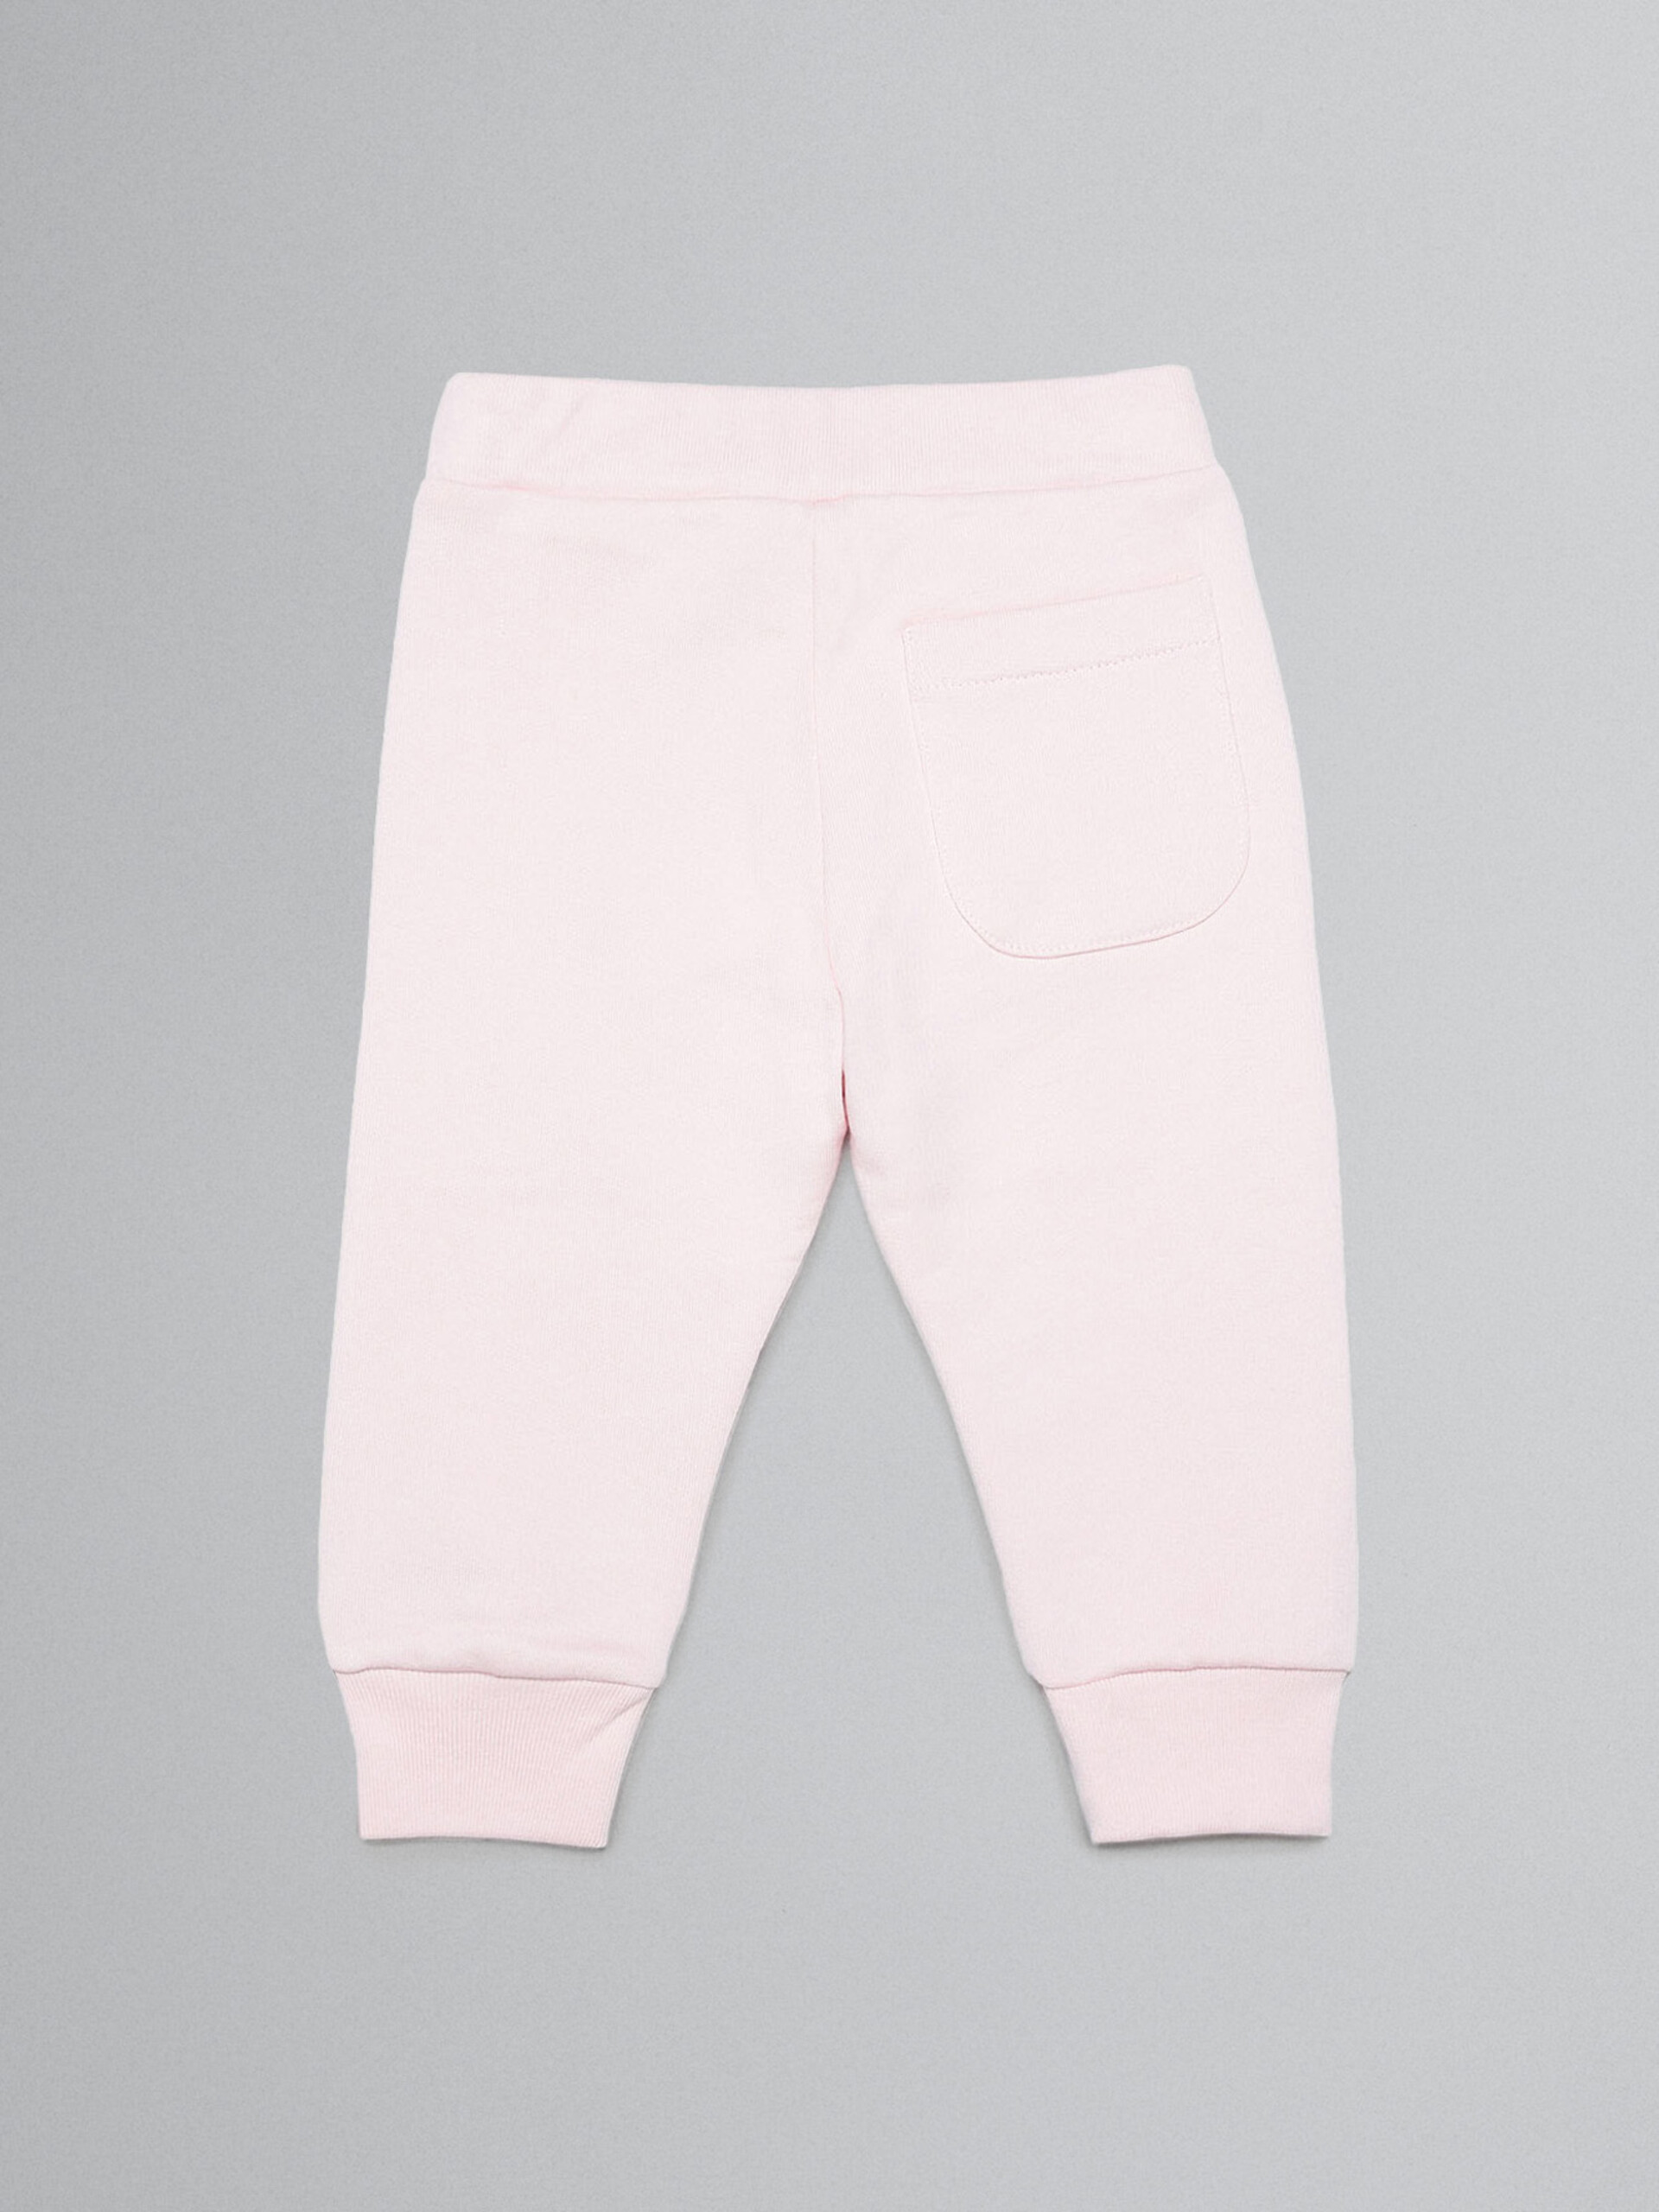 Ballet pink track pants with "Marni" print - Pants - Image 2